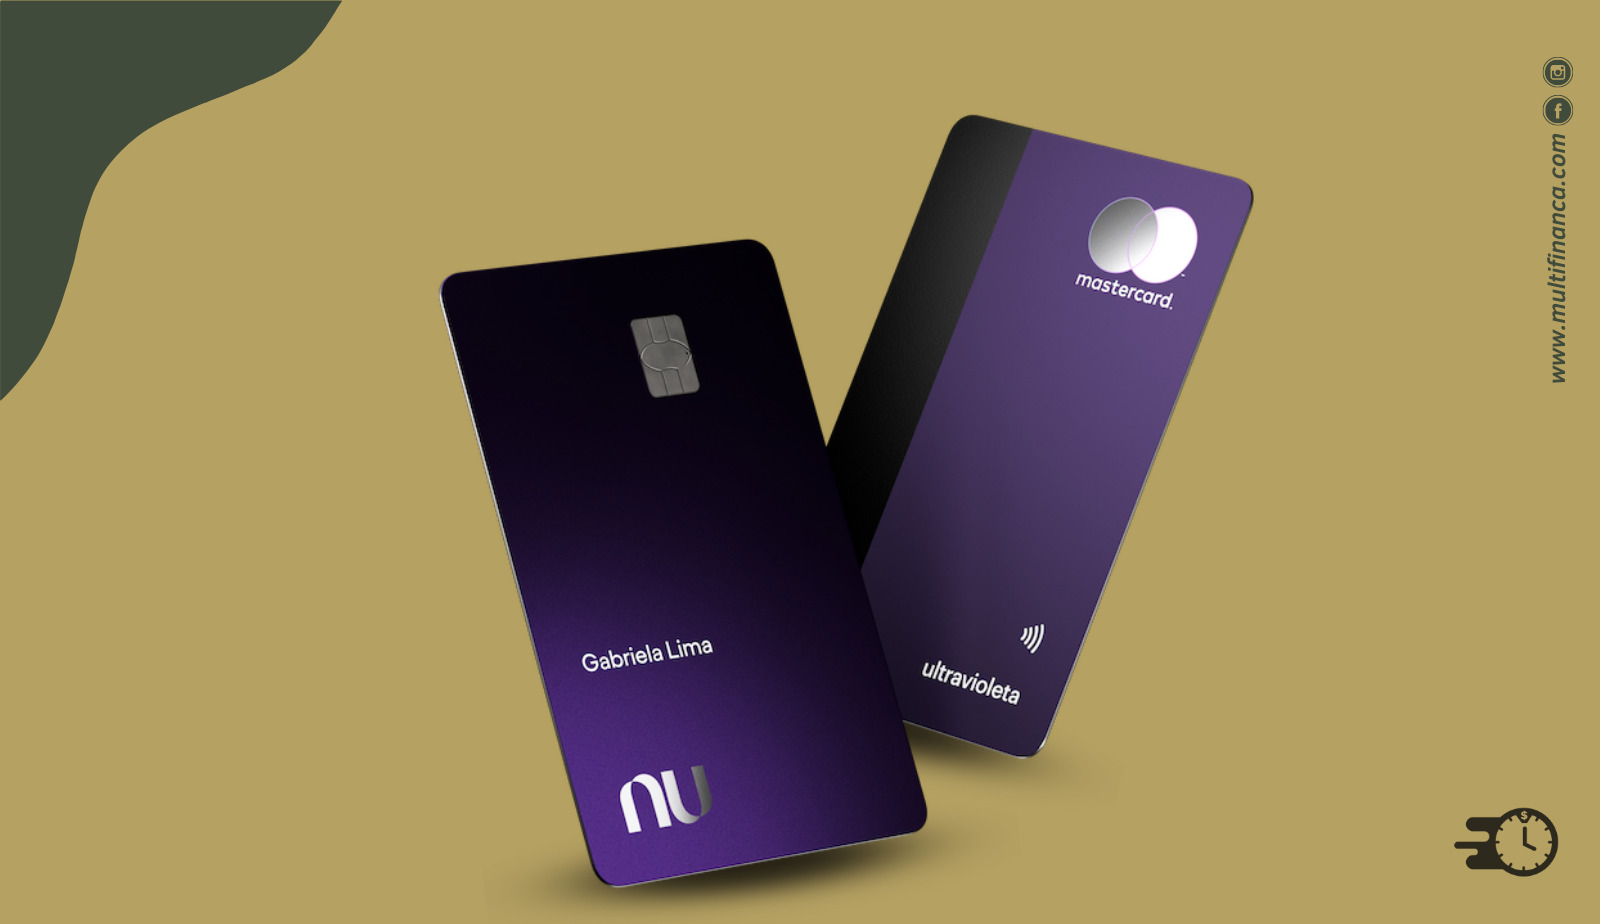 Cartão Nubank ultravioleta